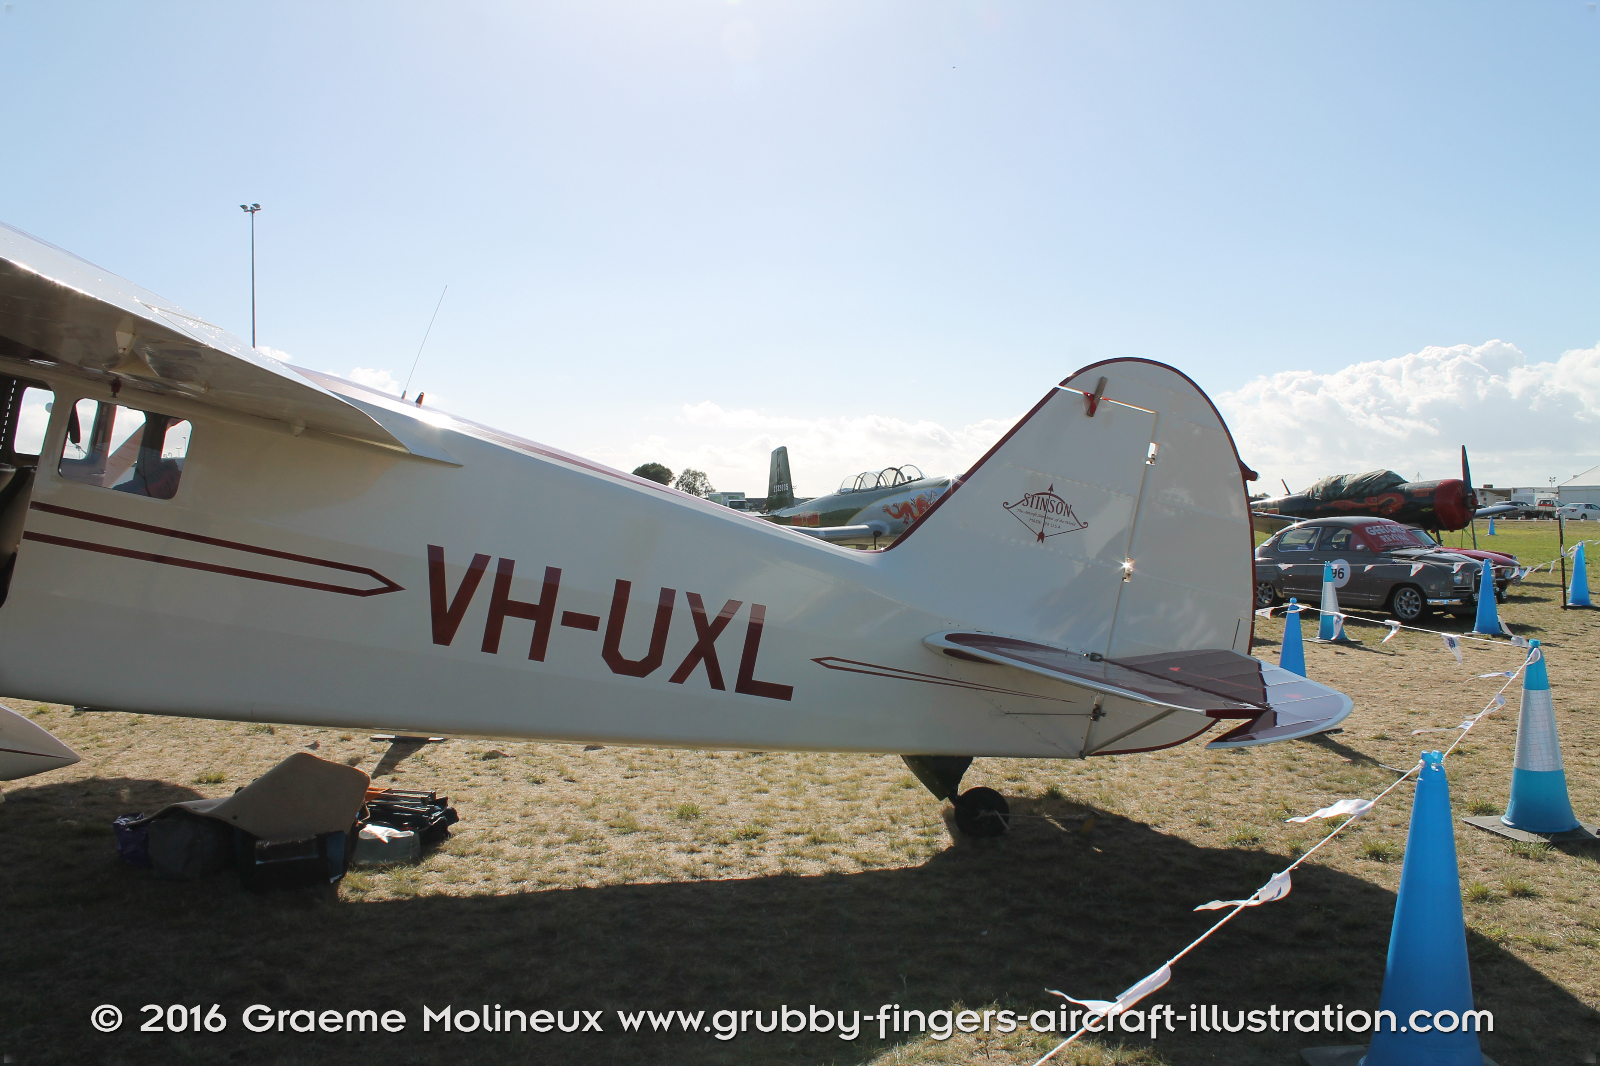 STINSON_Reliant_VH-UXL_Avalon_Airshow_2015_16_GrubbyFingers